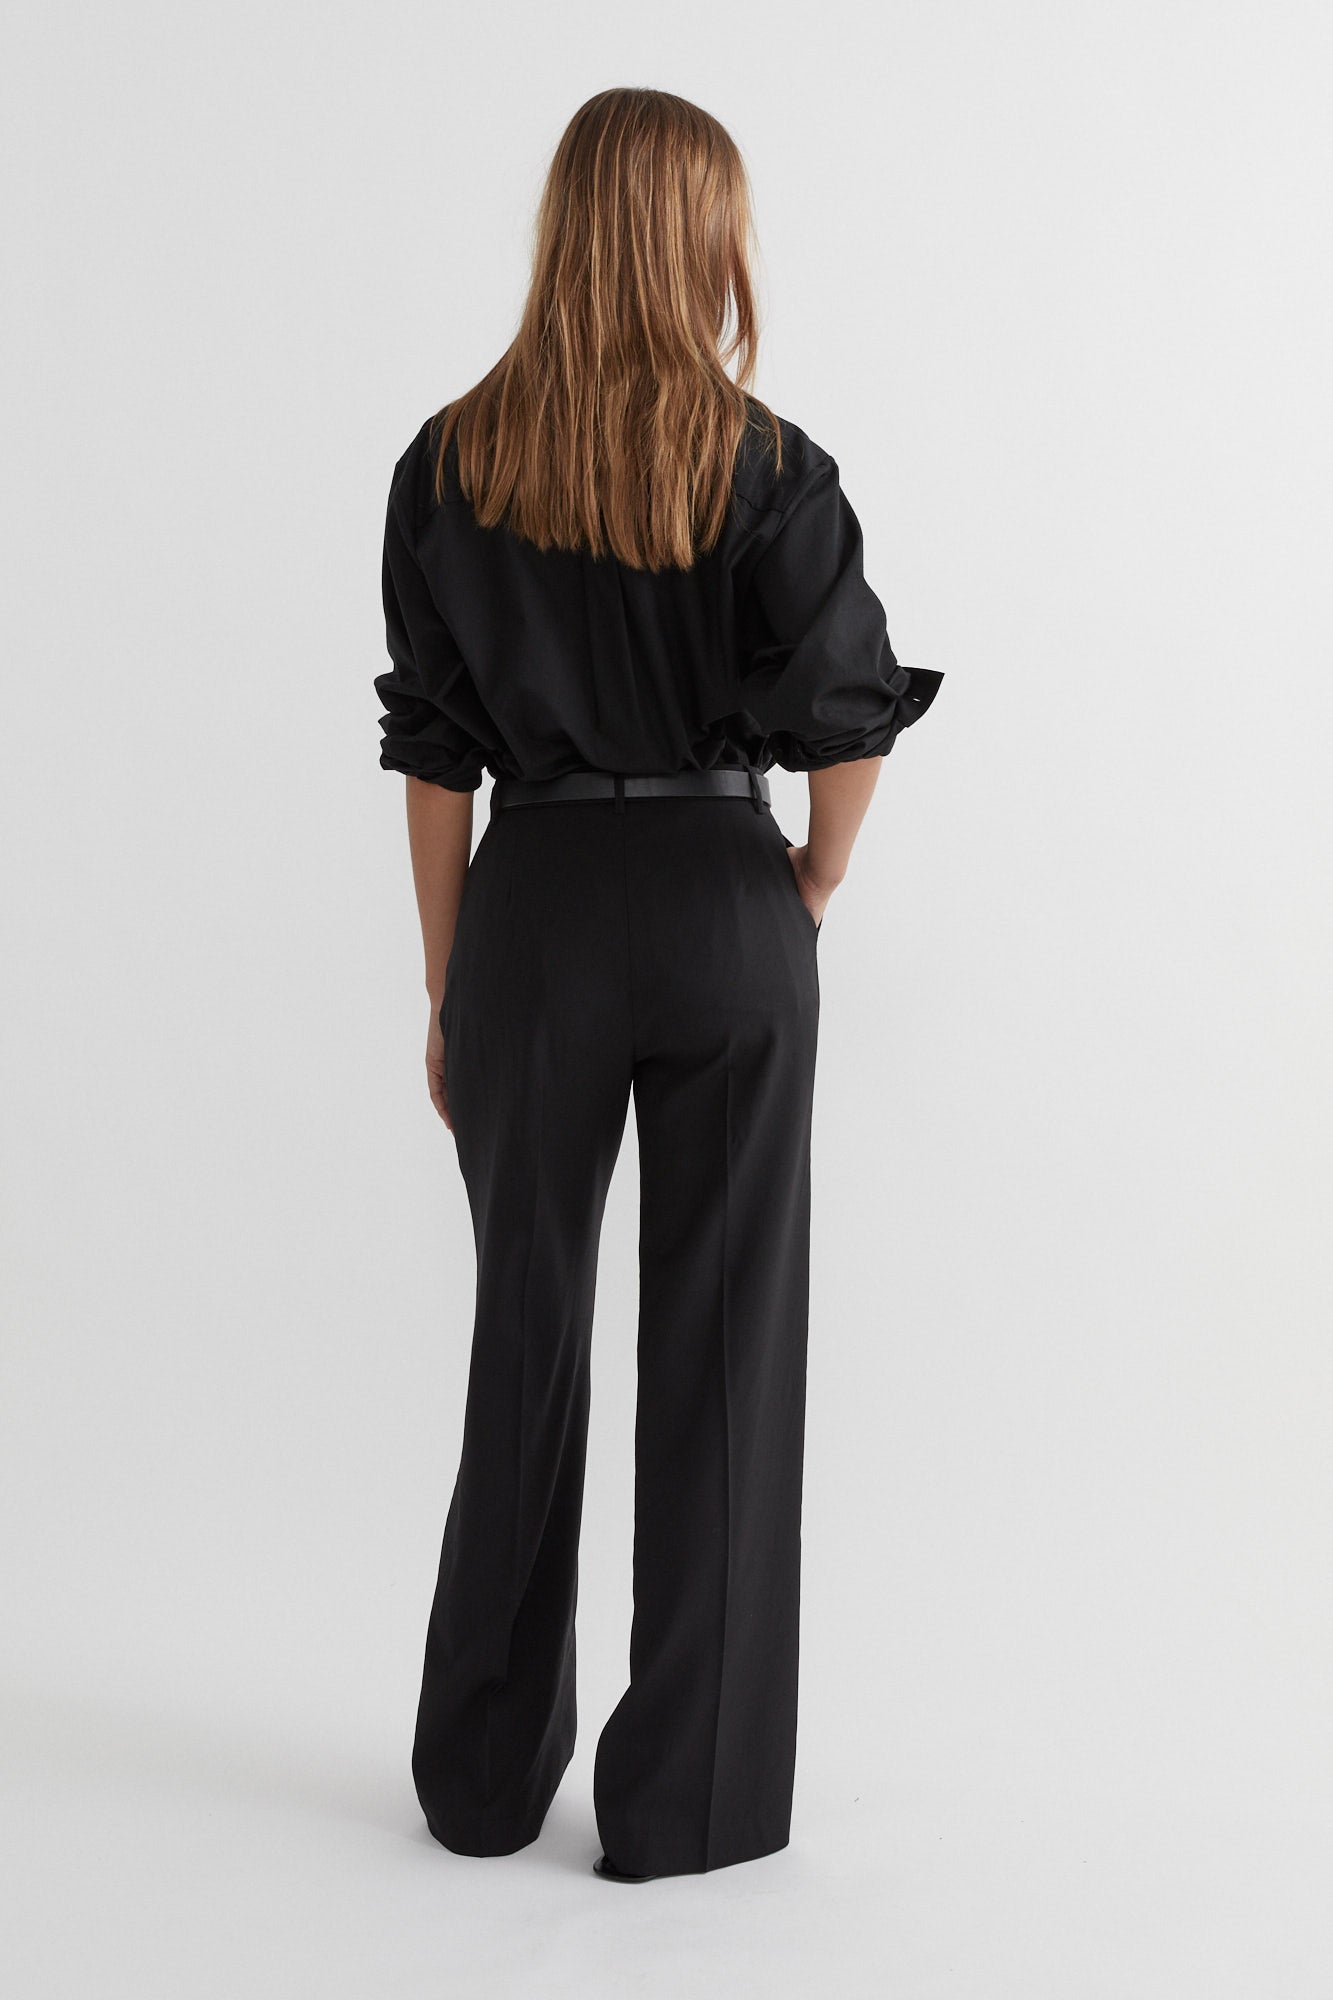 SAINT Lookbook Organic Cotton Shirt in black, long sleeve button up. Made in Australia